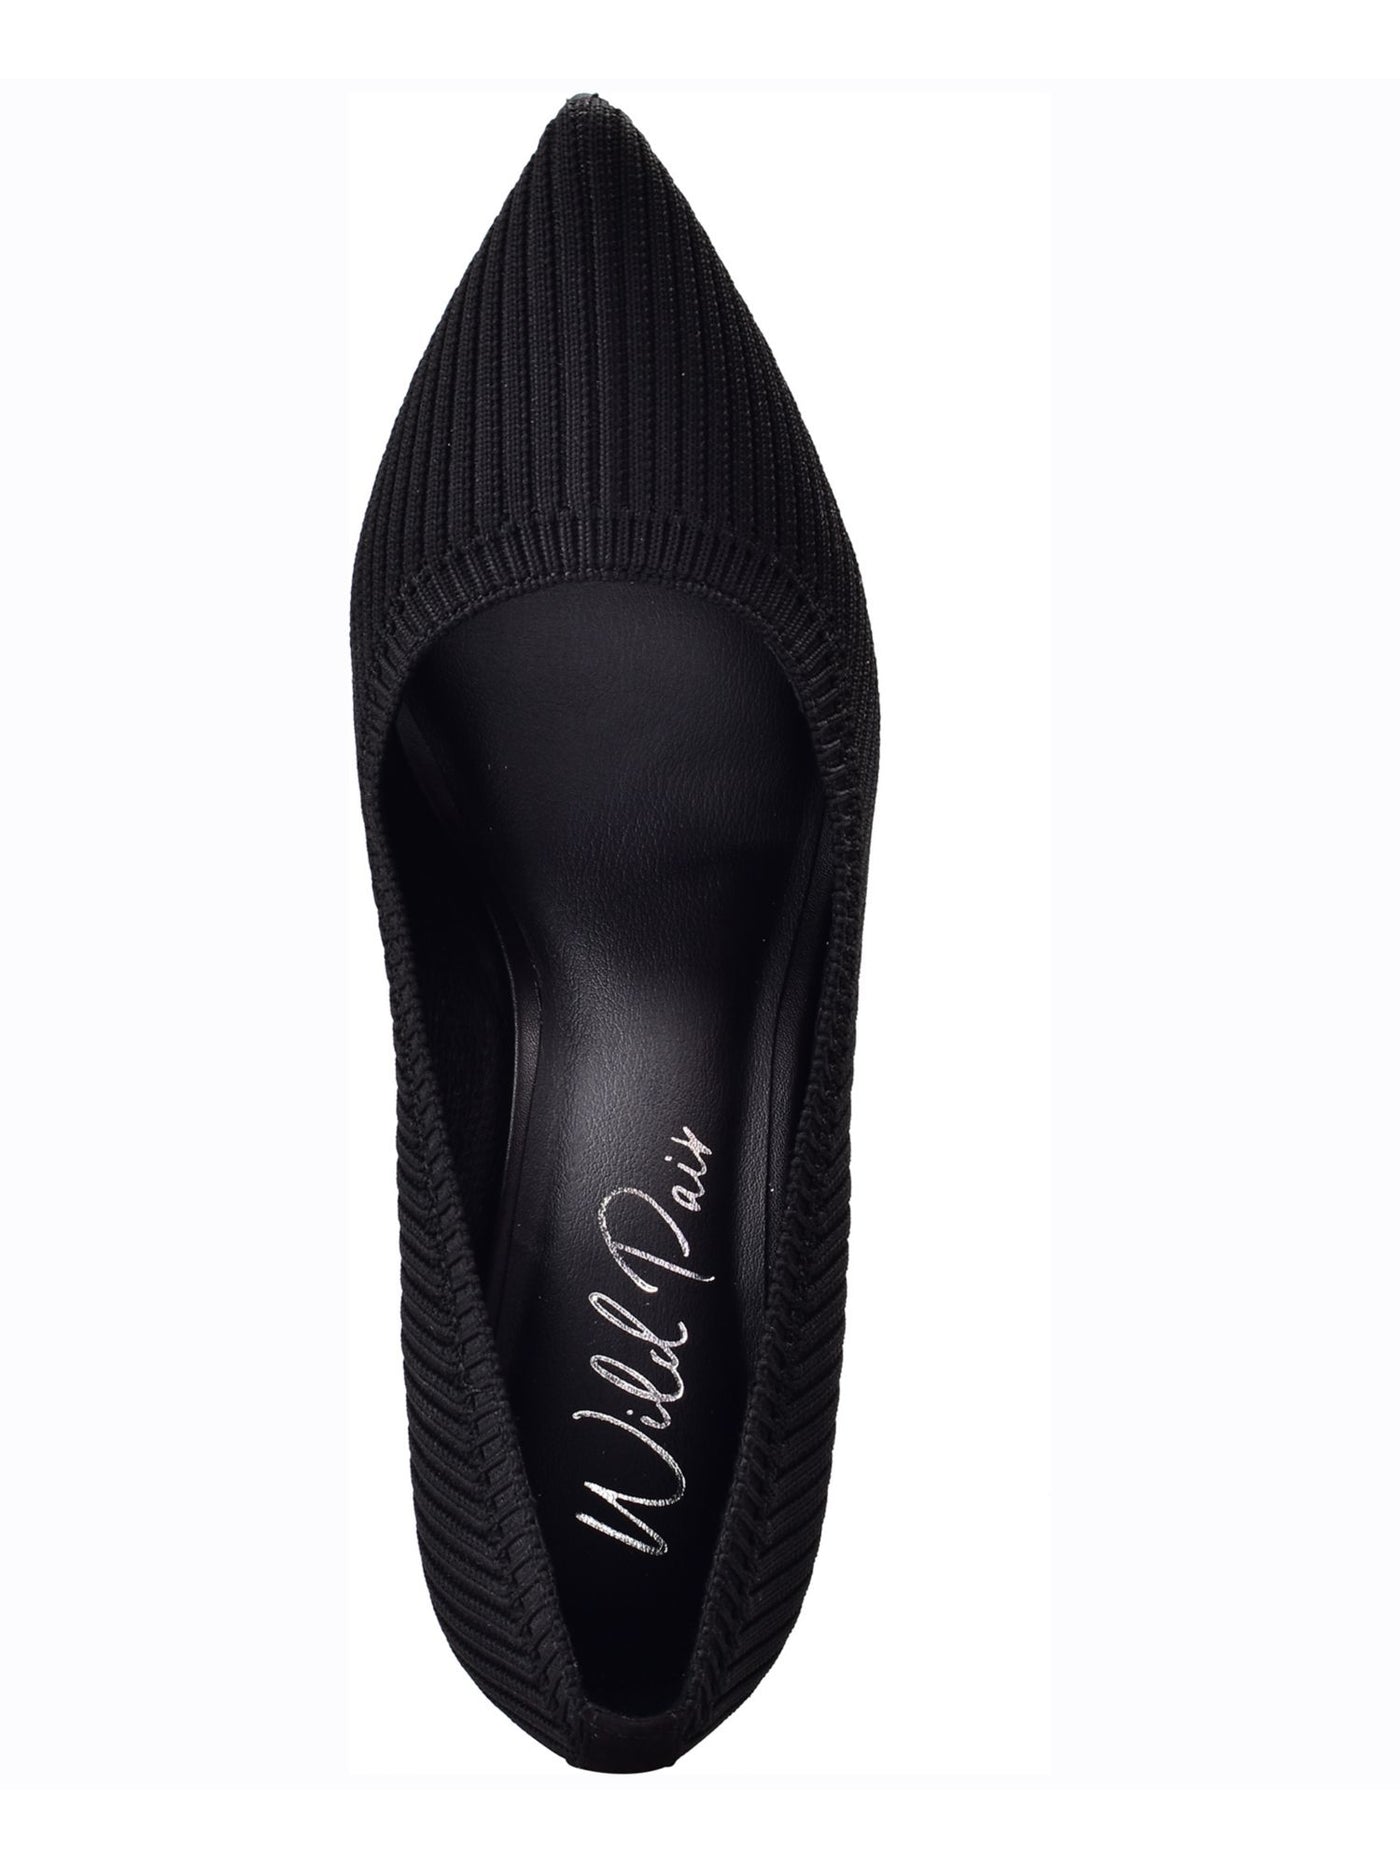 WILD PAIR Womens Black Striped Comfort Daliaa Pointed Toe Stiletto Slip On Dress Pumps Shoes 8.5 M